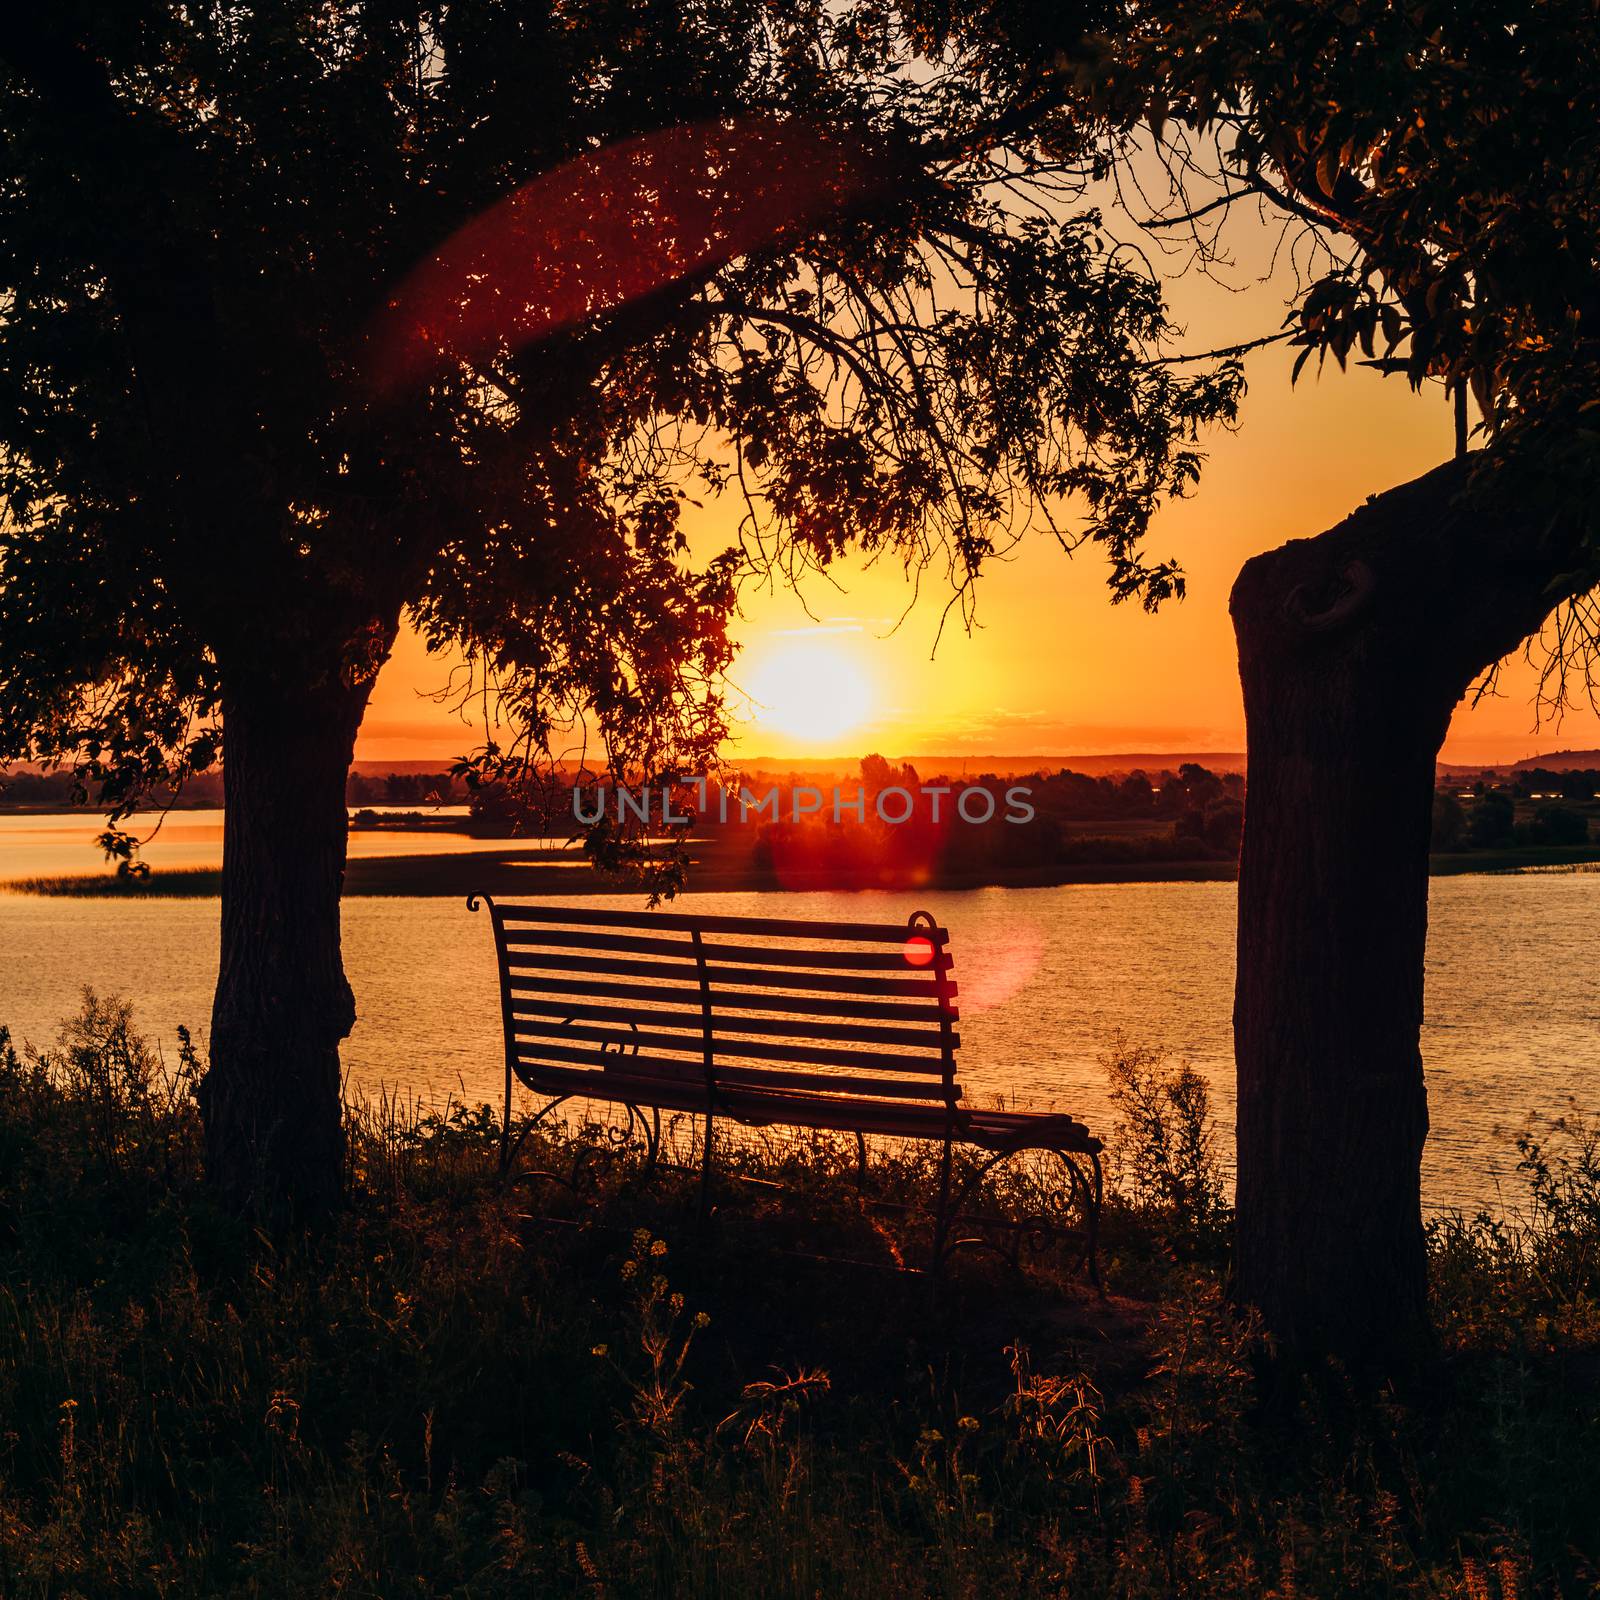 Bench by the River. by Seva_blsv